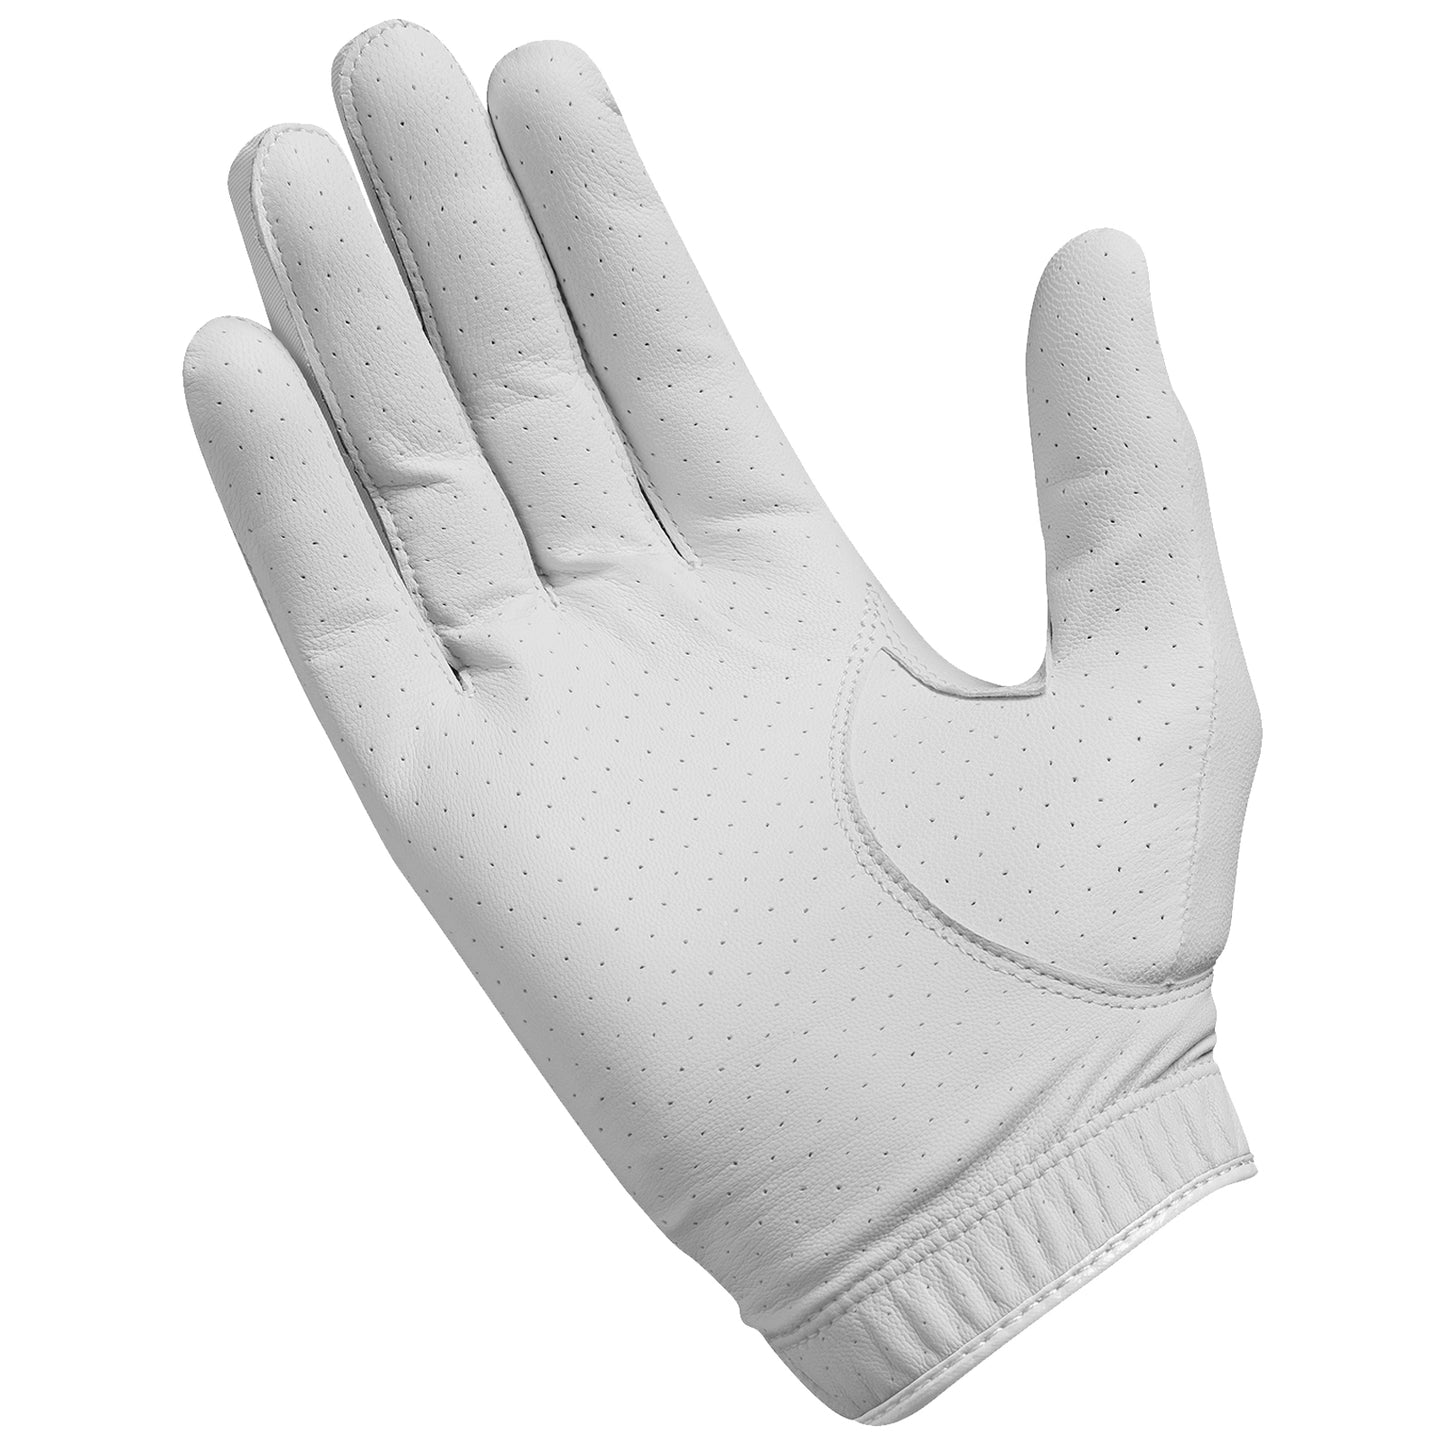 TaylorMade Junior RIGHT Hand Stratus Golf Glove